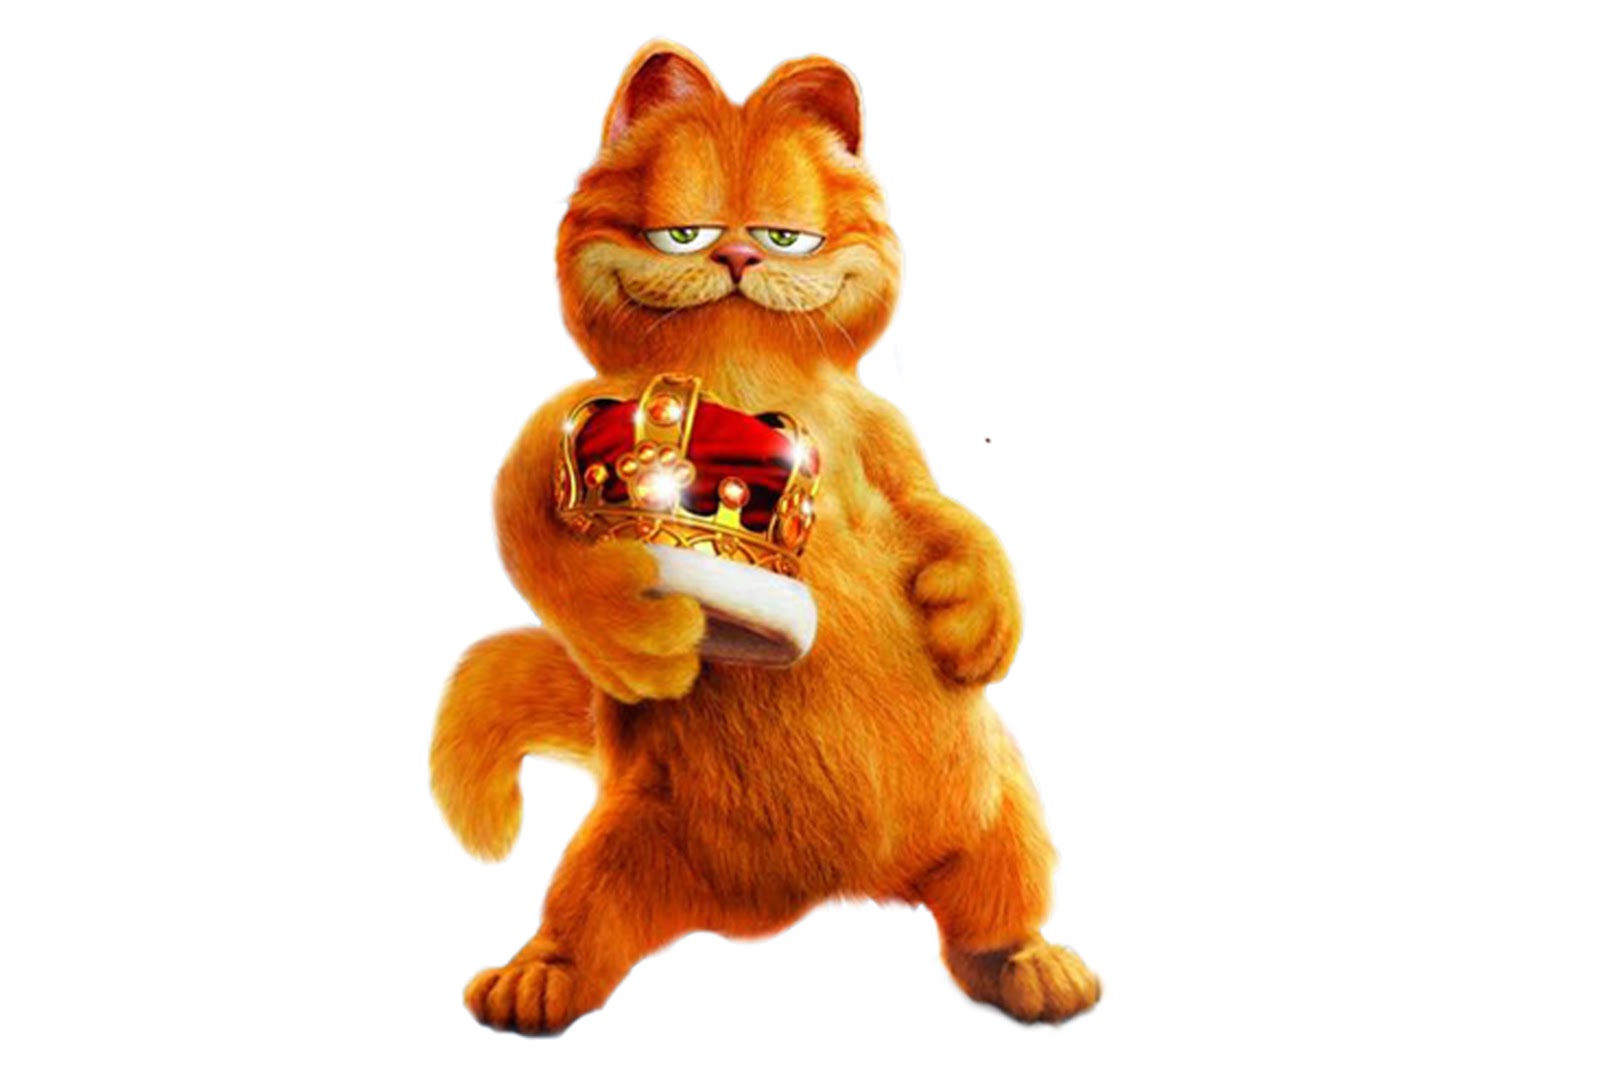  Gambar  Wallpaper Lucu Gambar Kucing Garfield  Terbaru 2019 